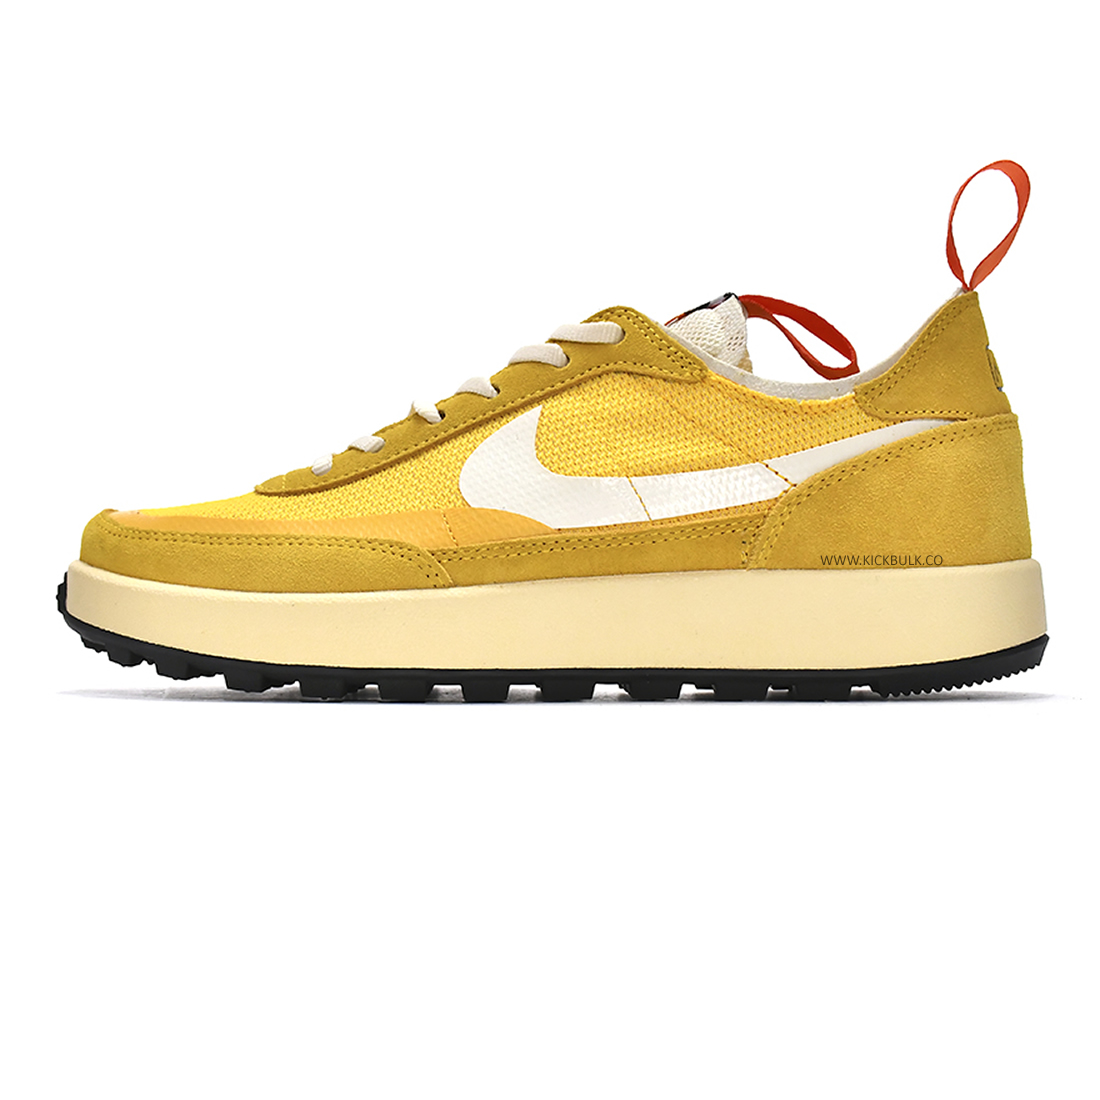 Tom Sachs Nikecraft General Purpose Shoe Yellow Wmns Da6672 700 1 - kickbulk.co